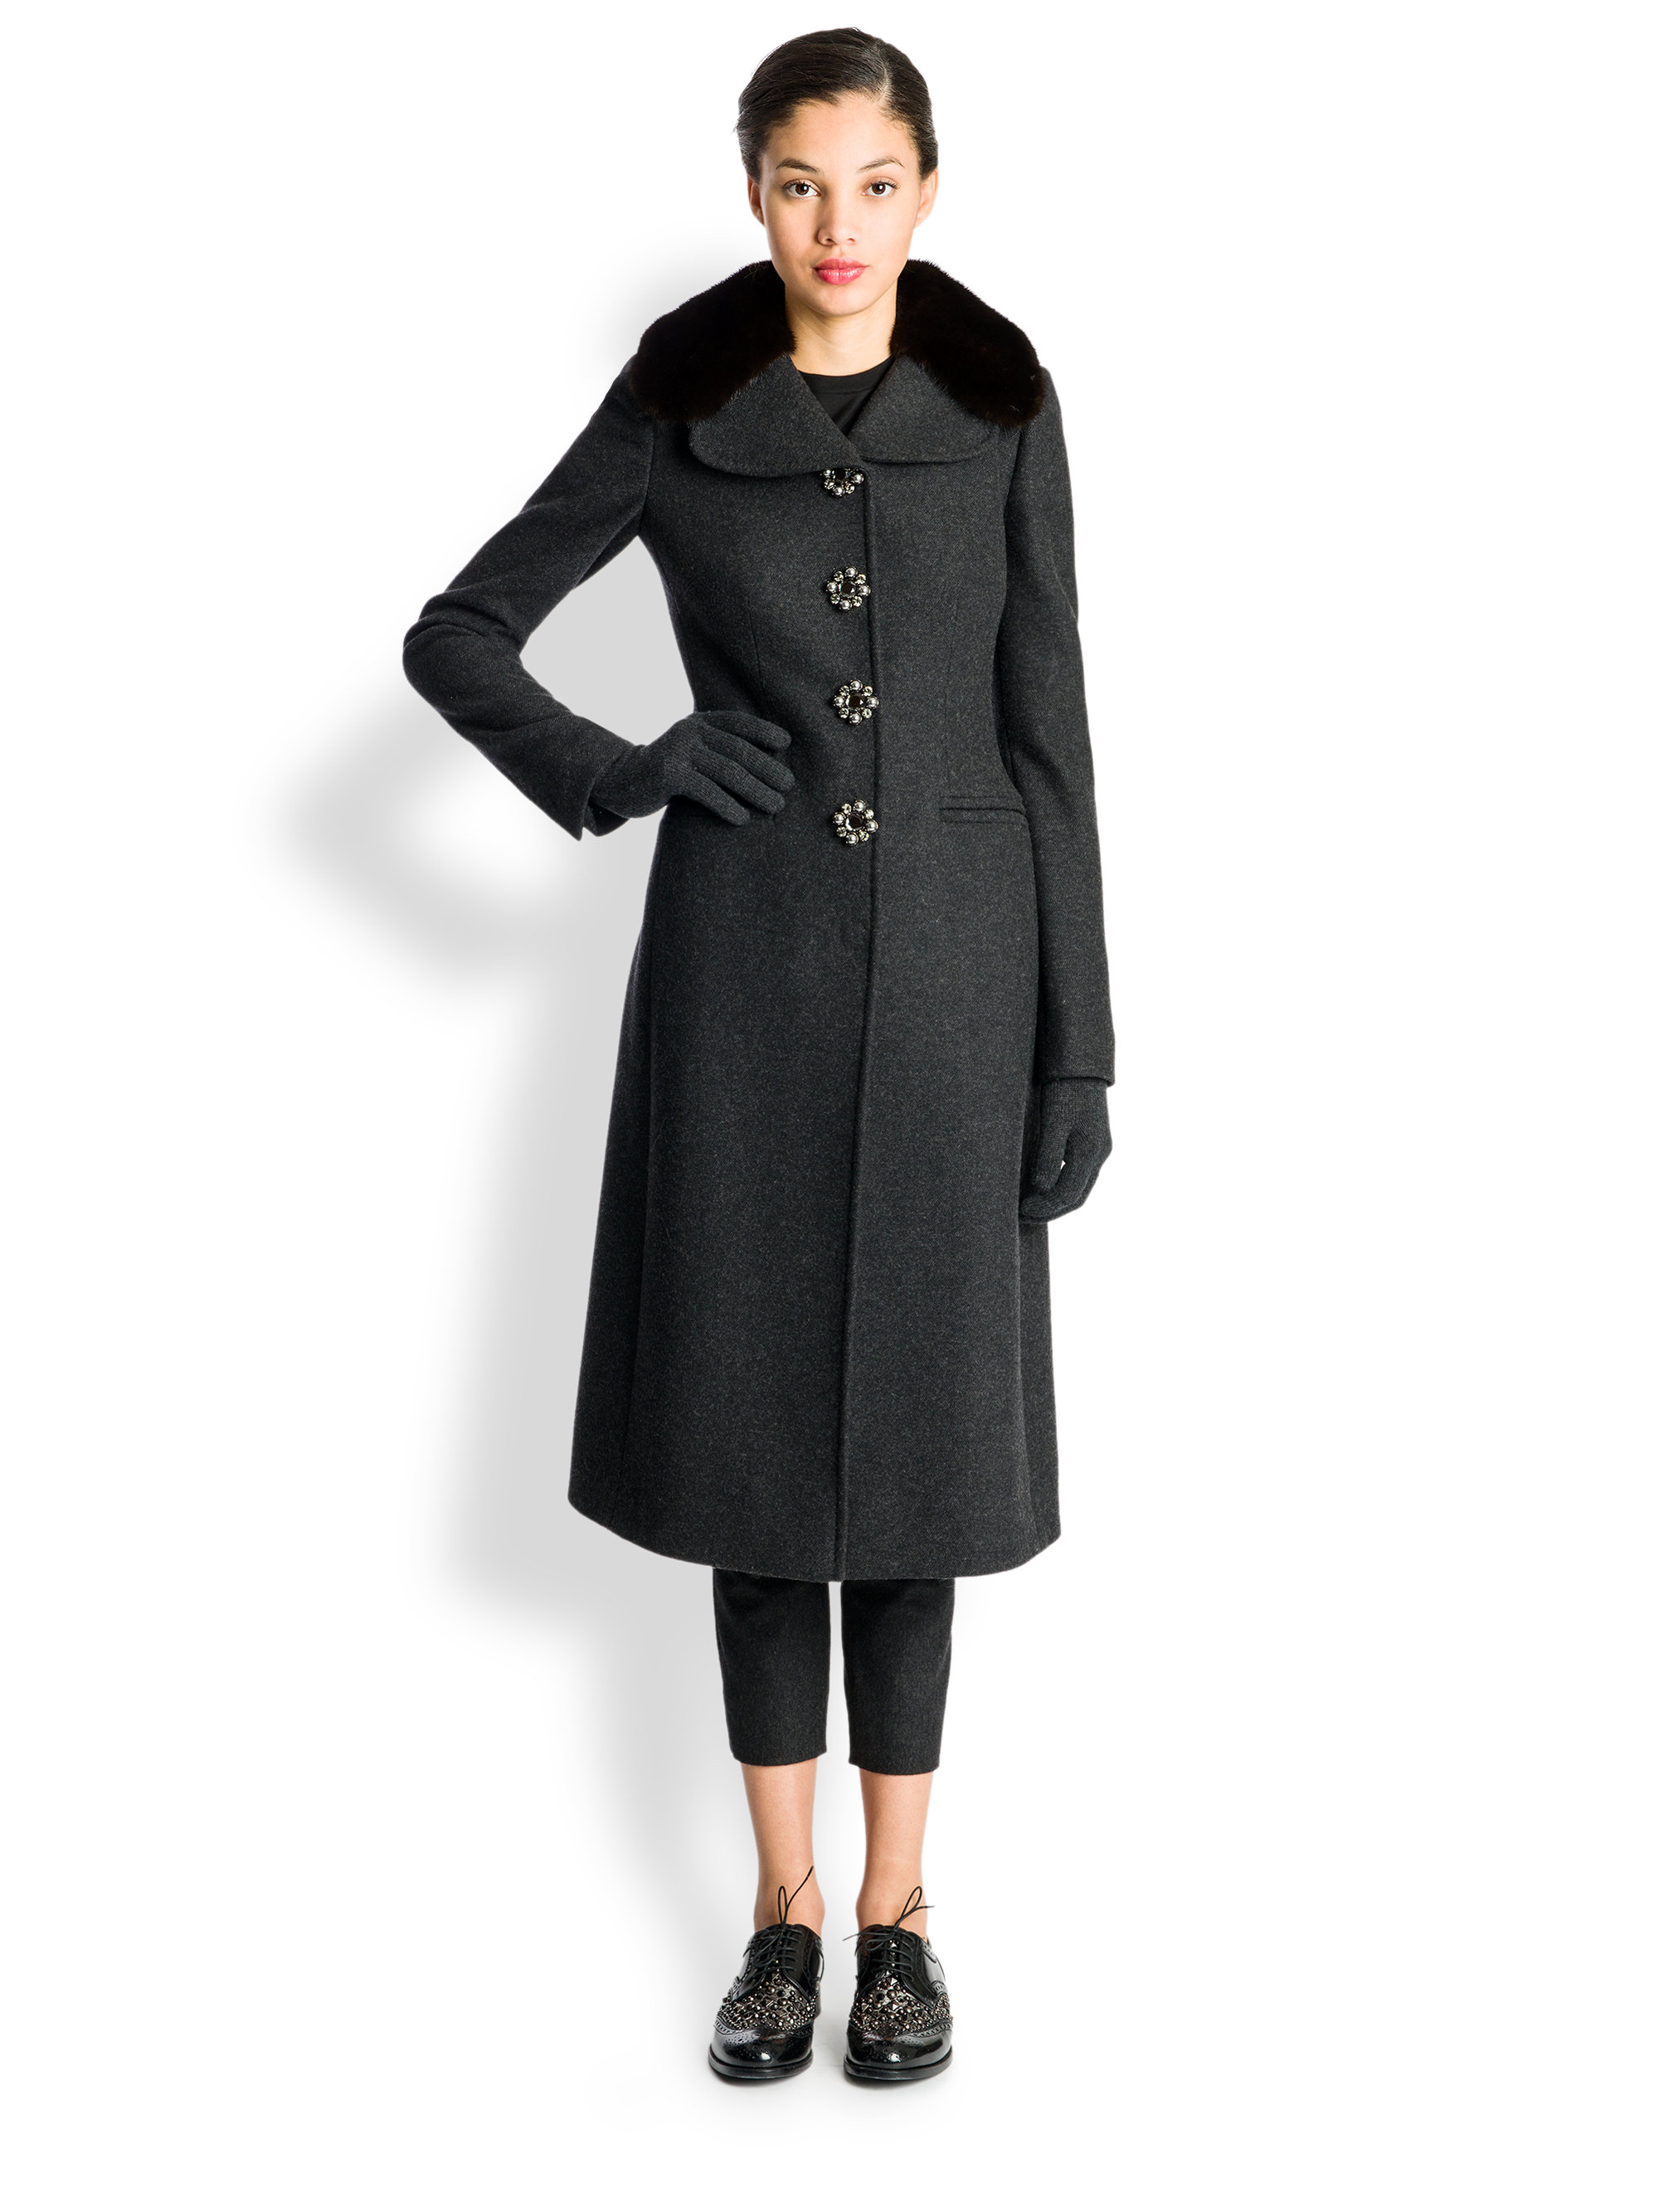 Lyst - Dolce & Gabbana Wool Fur-Trimmed Coat in Black